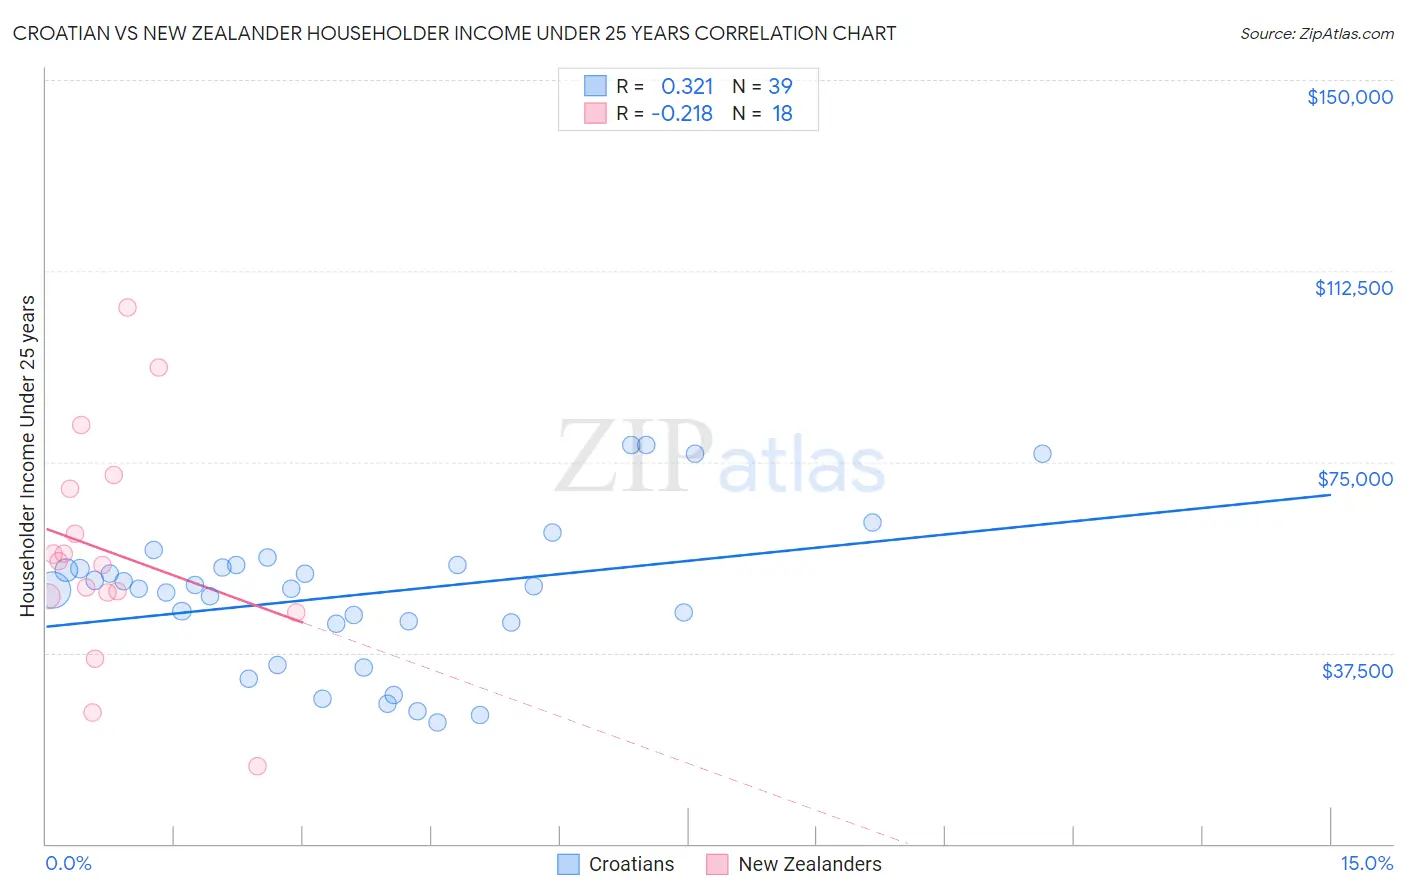 Croatian vs New Zealander Householder Income Under 25 years